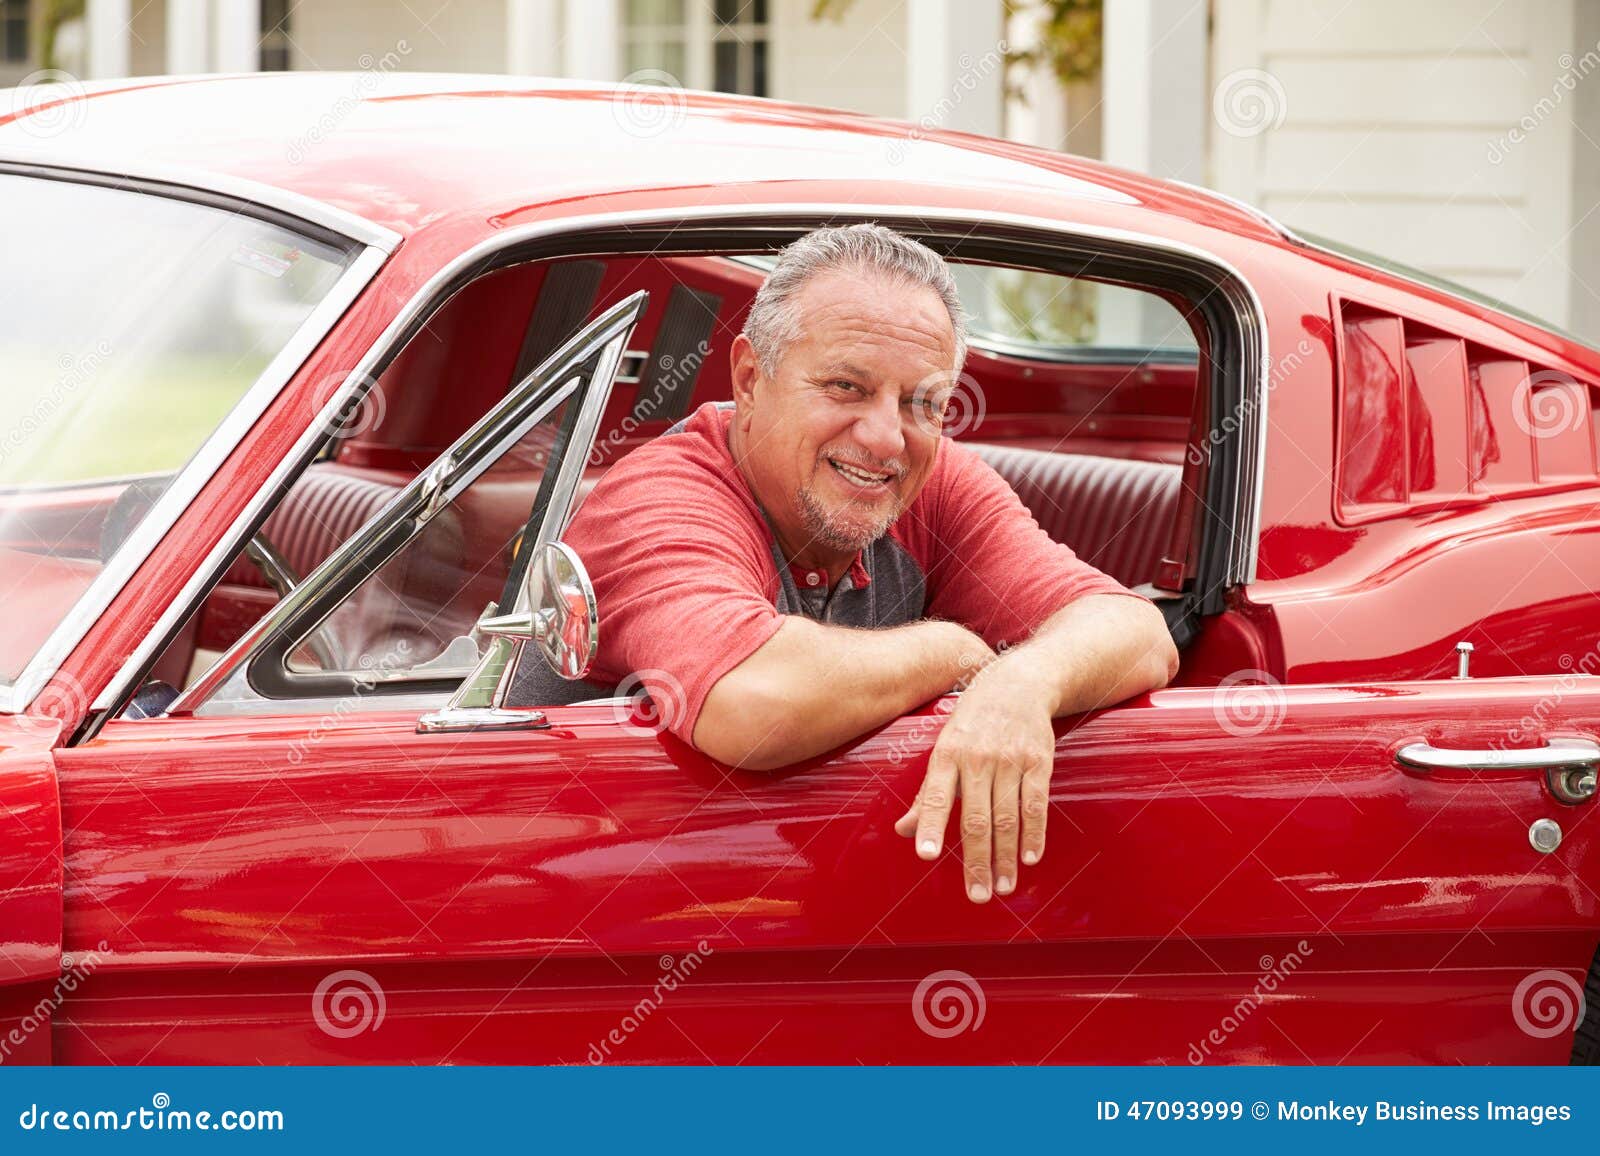 retired senior man sitting in restored classic car